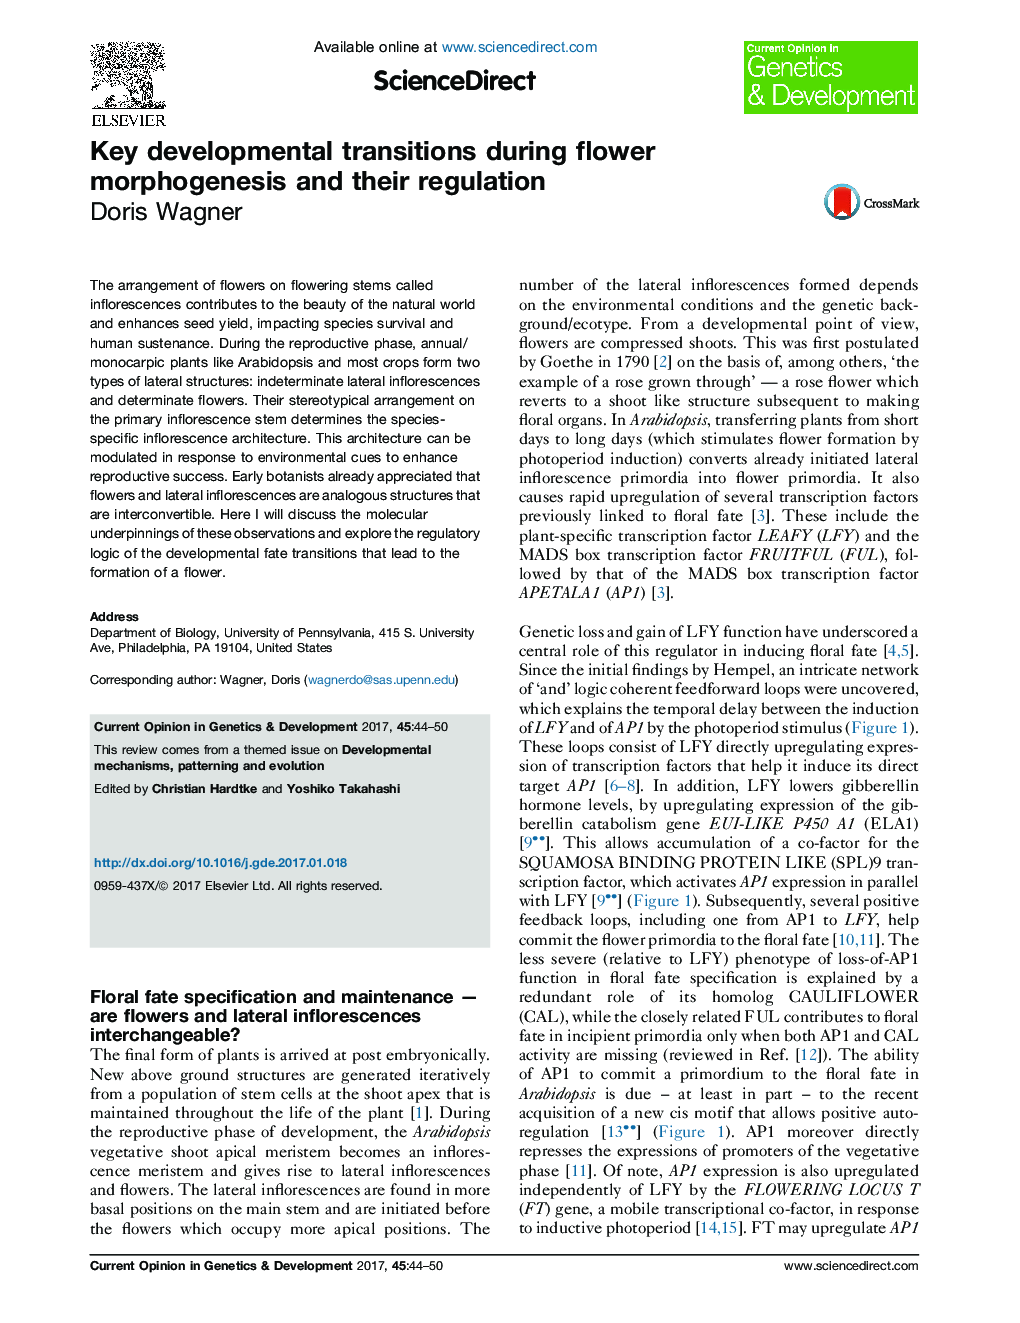 Key developmental transitions during flower morphogenesis and their regulation